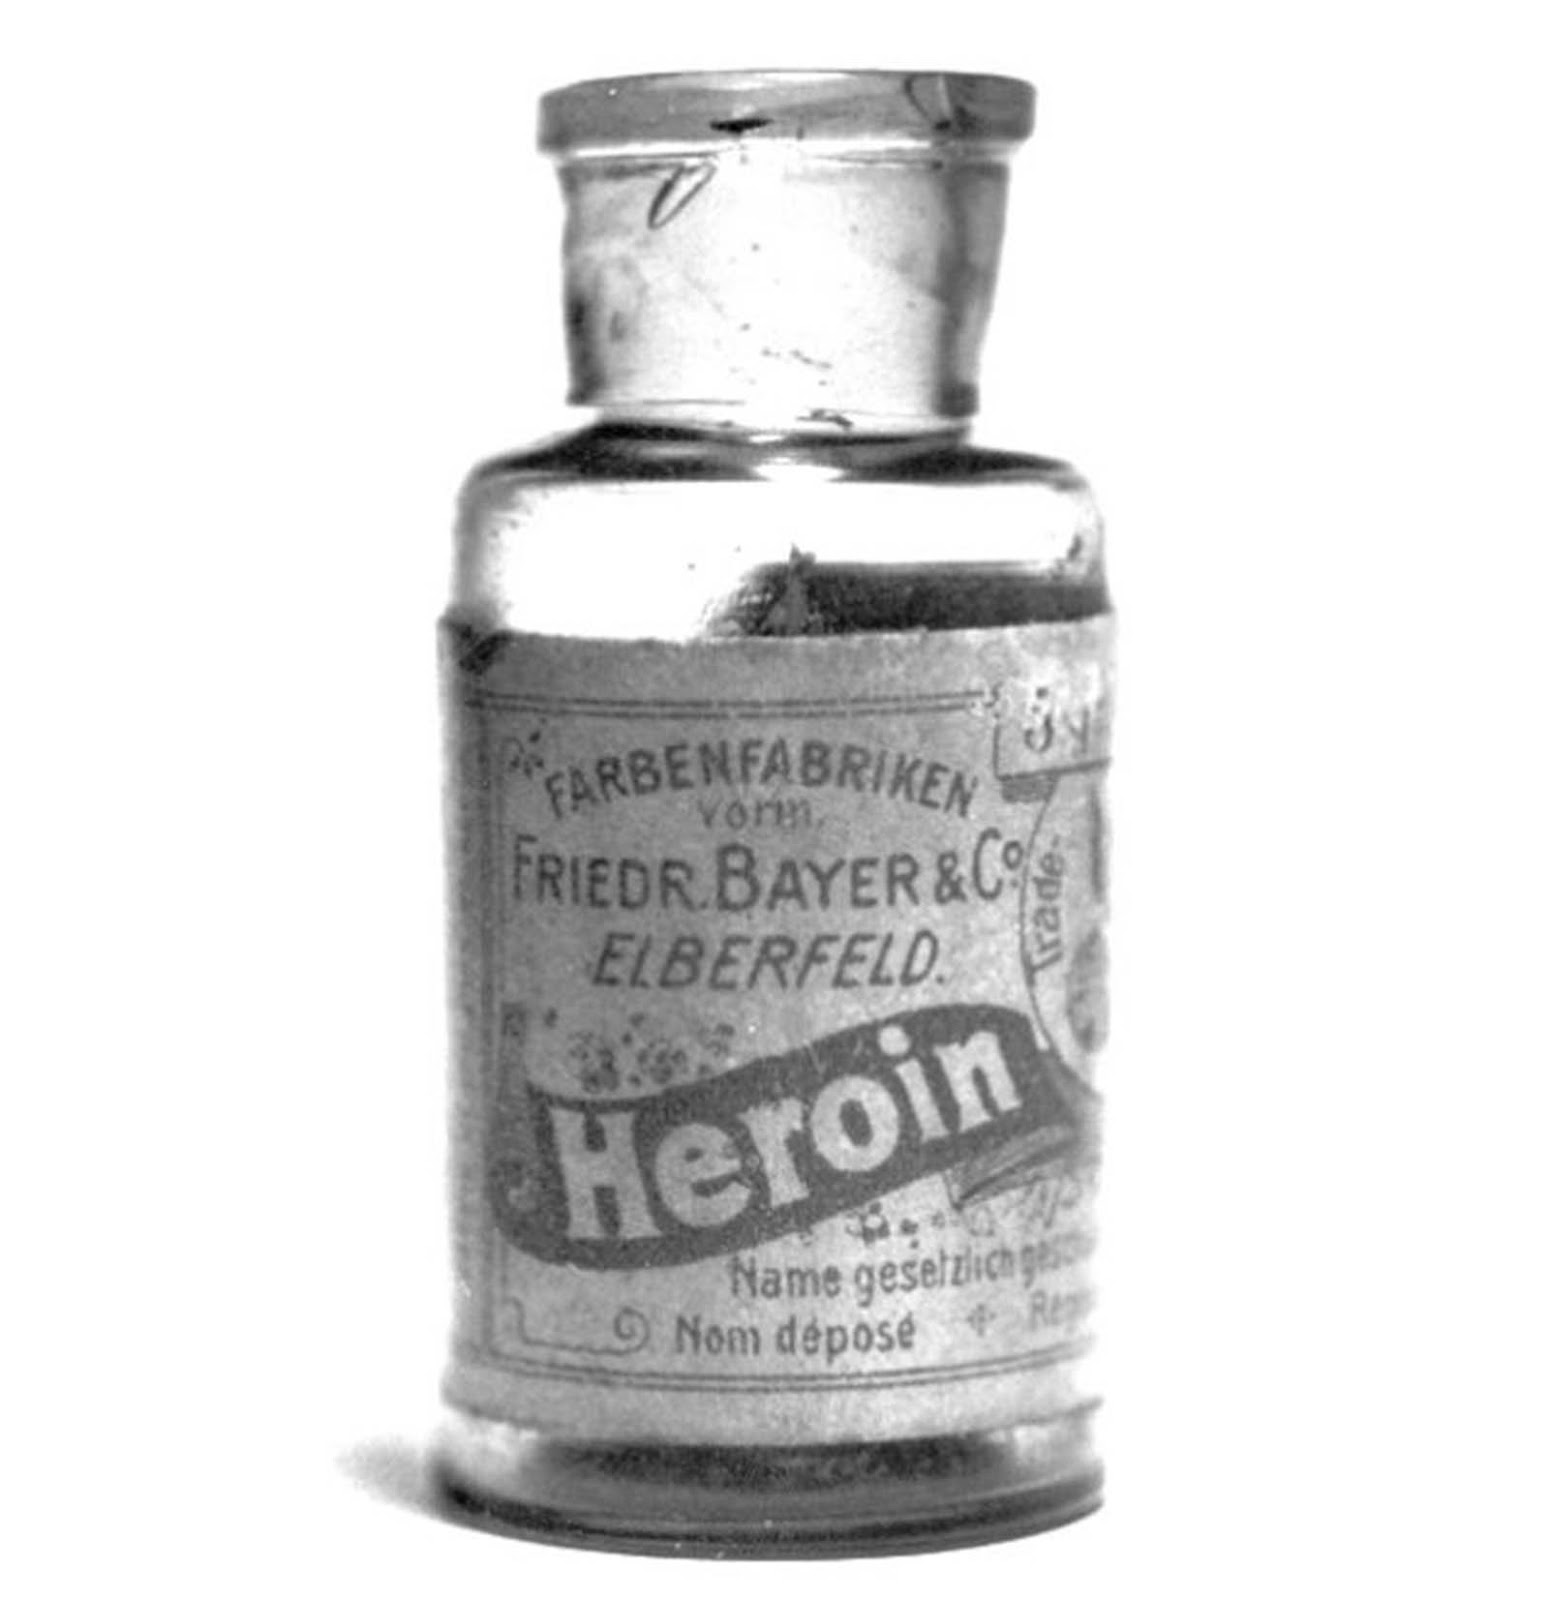 Bayer’s heroin.